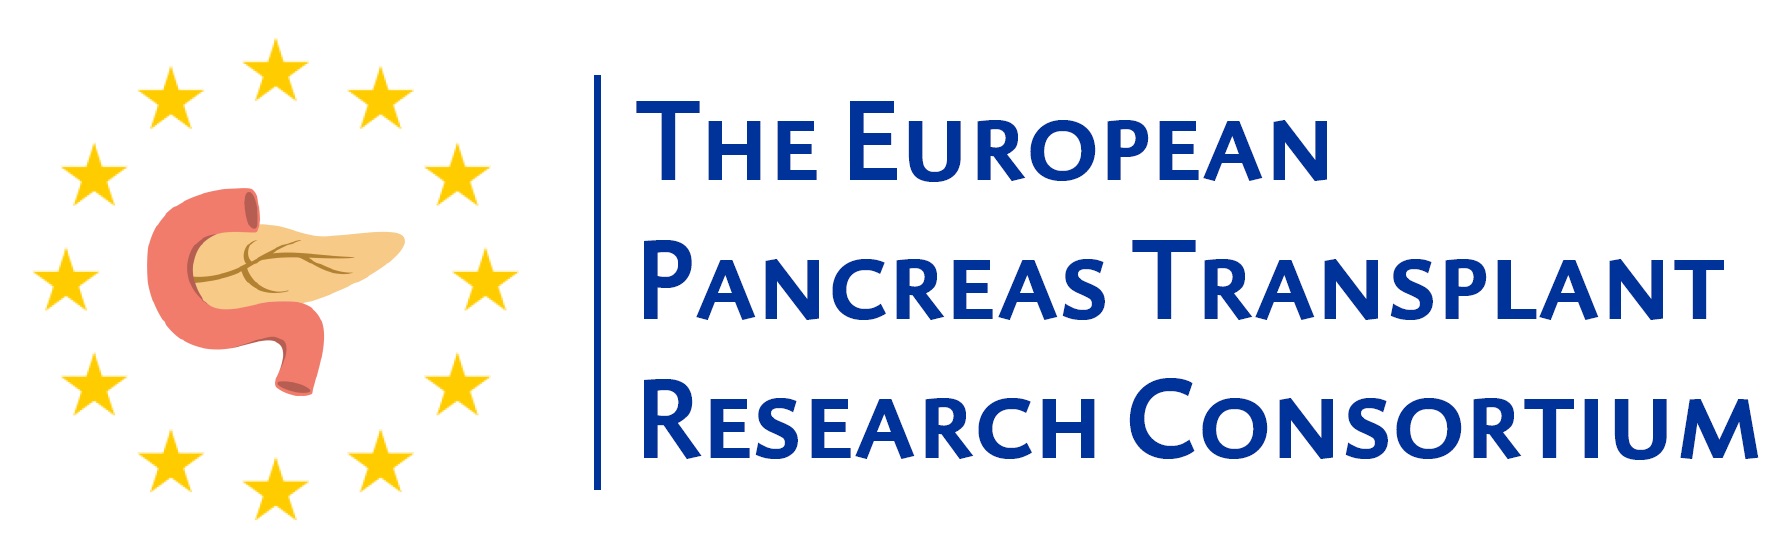 EPTRC | The European Pancreas Transplant Research Consortium